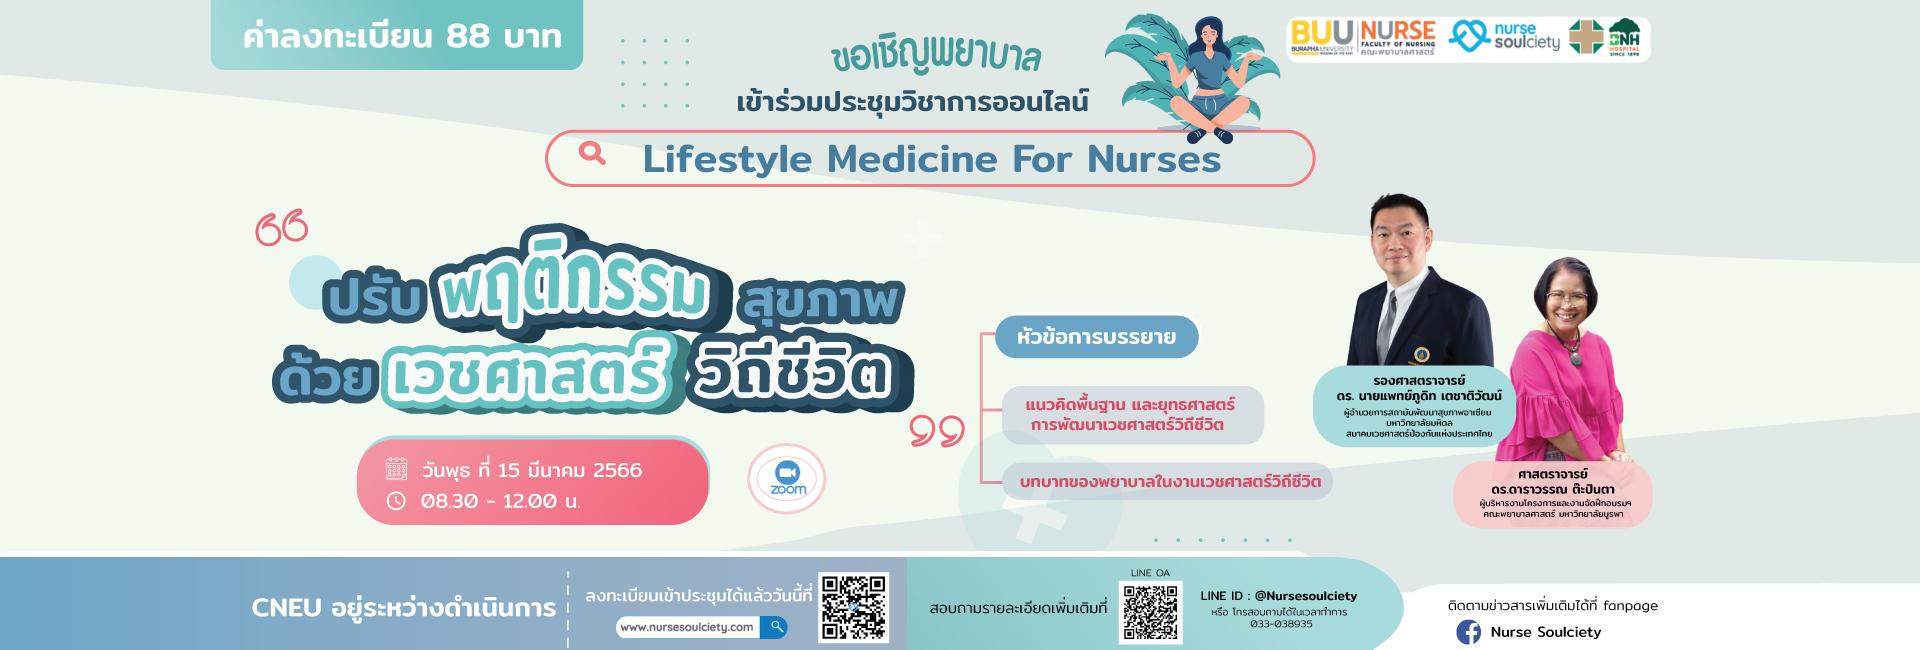 Lifestyle Medicine For Nurses